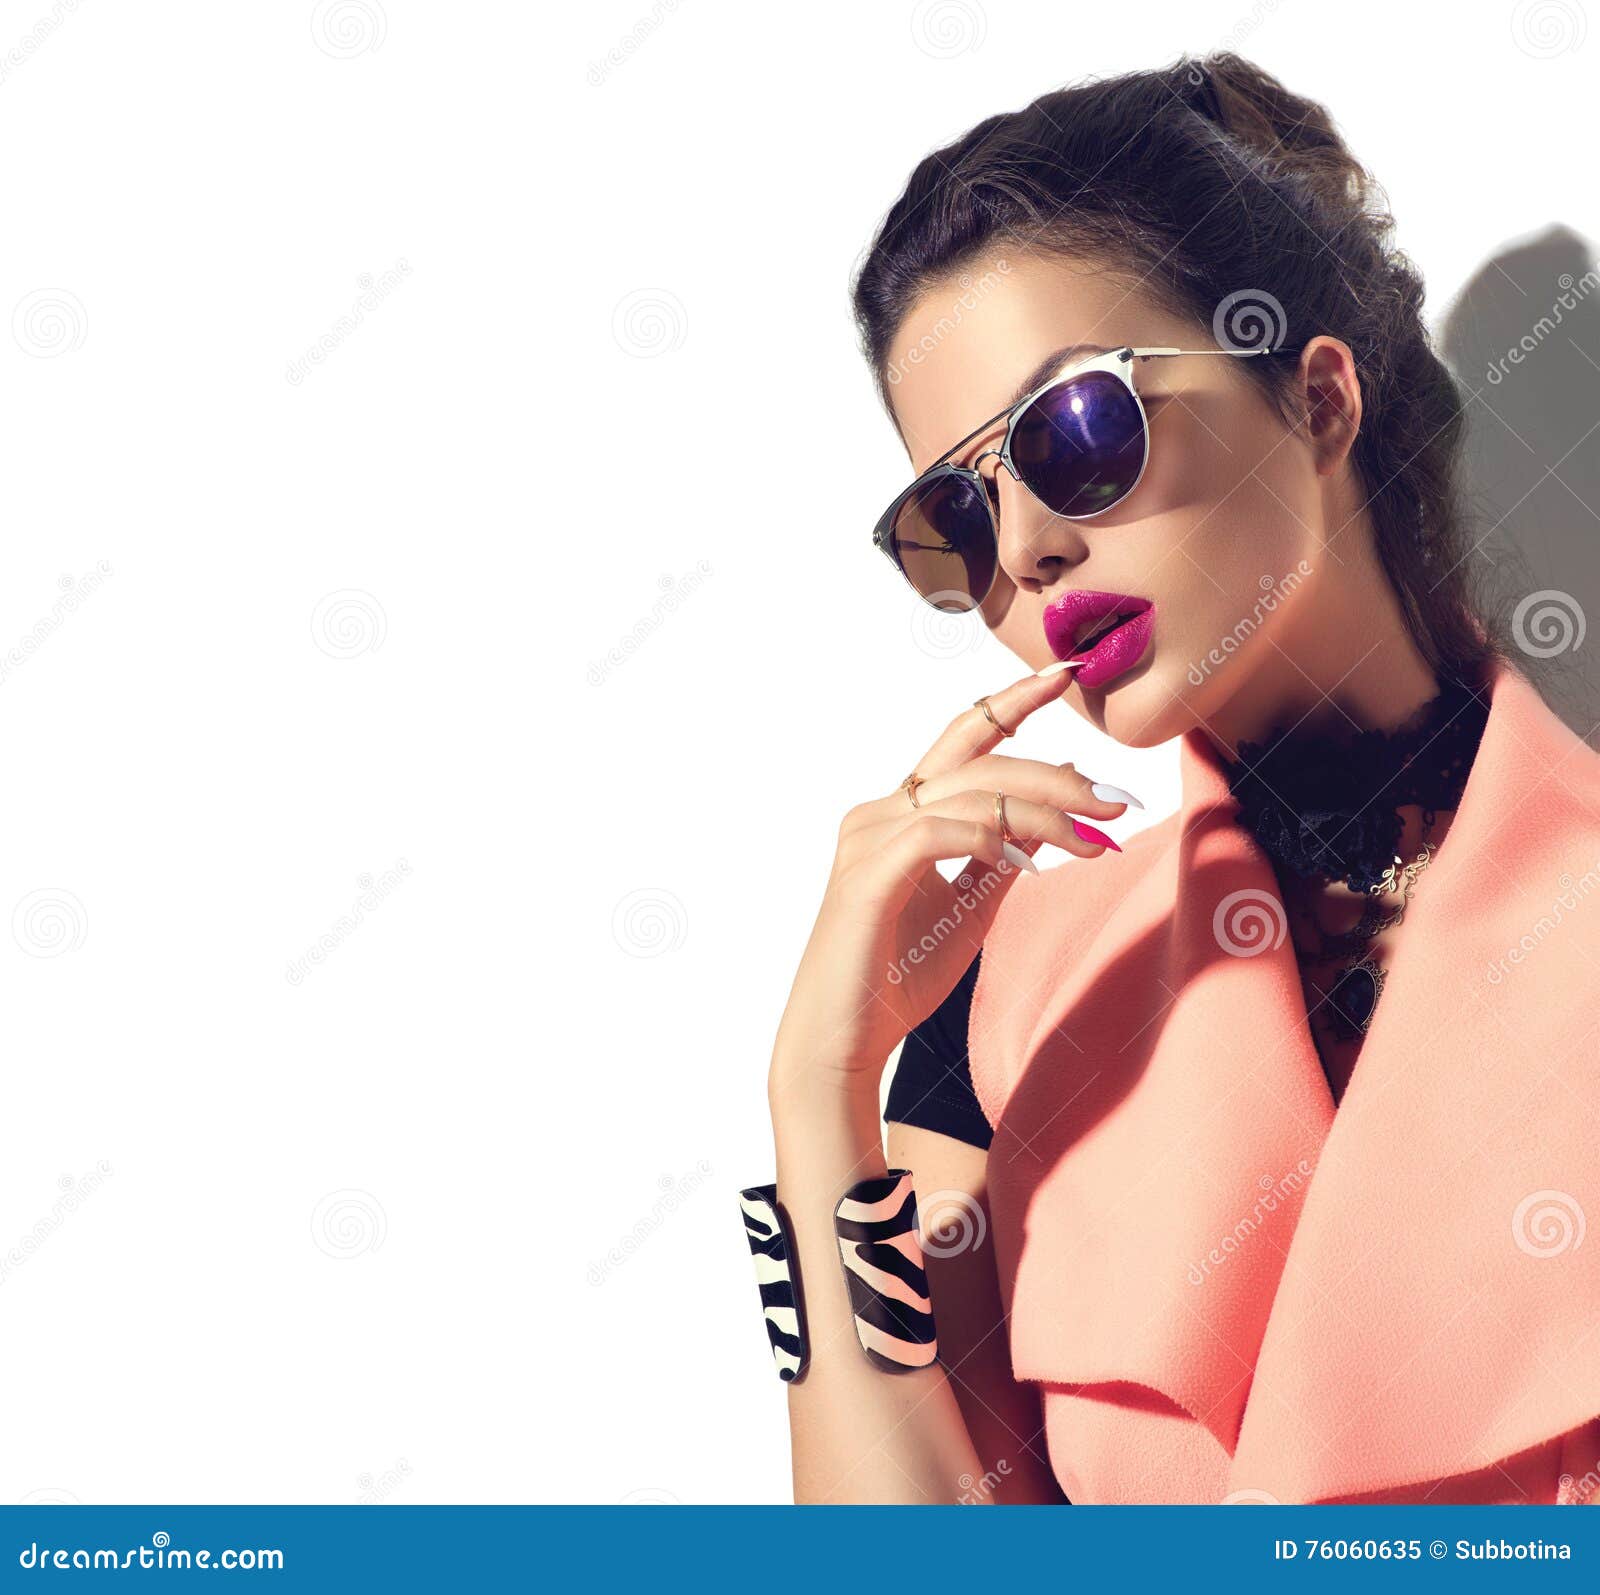 udobnost, izazov - Page 16 Beauty-fashion-model-girl-wearing-stylish-sunglasses-brown-hair-76060635